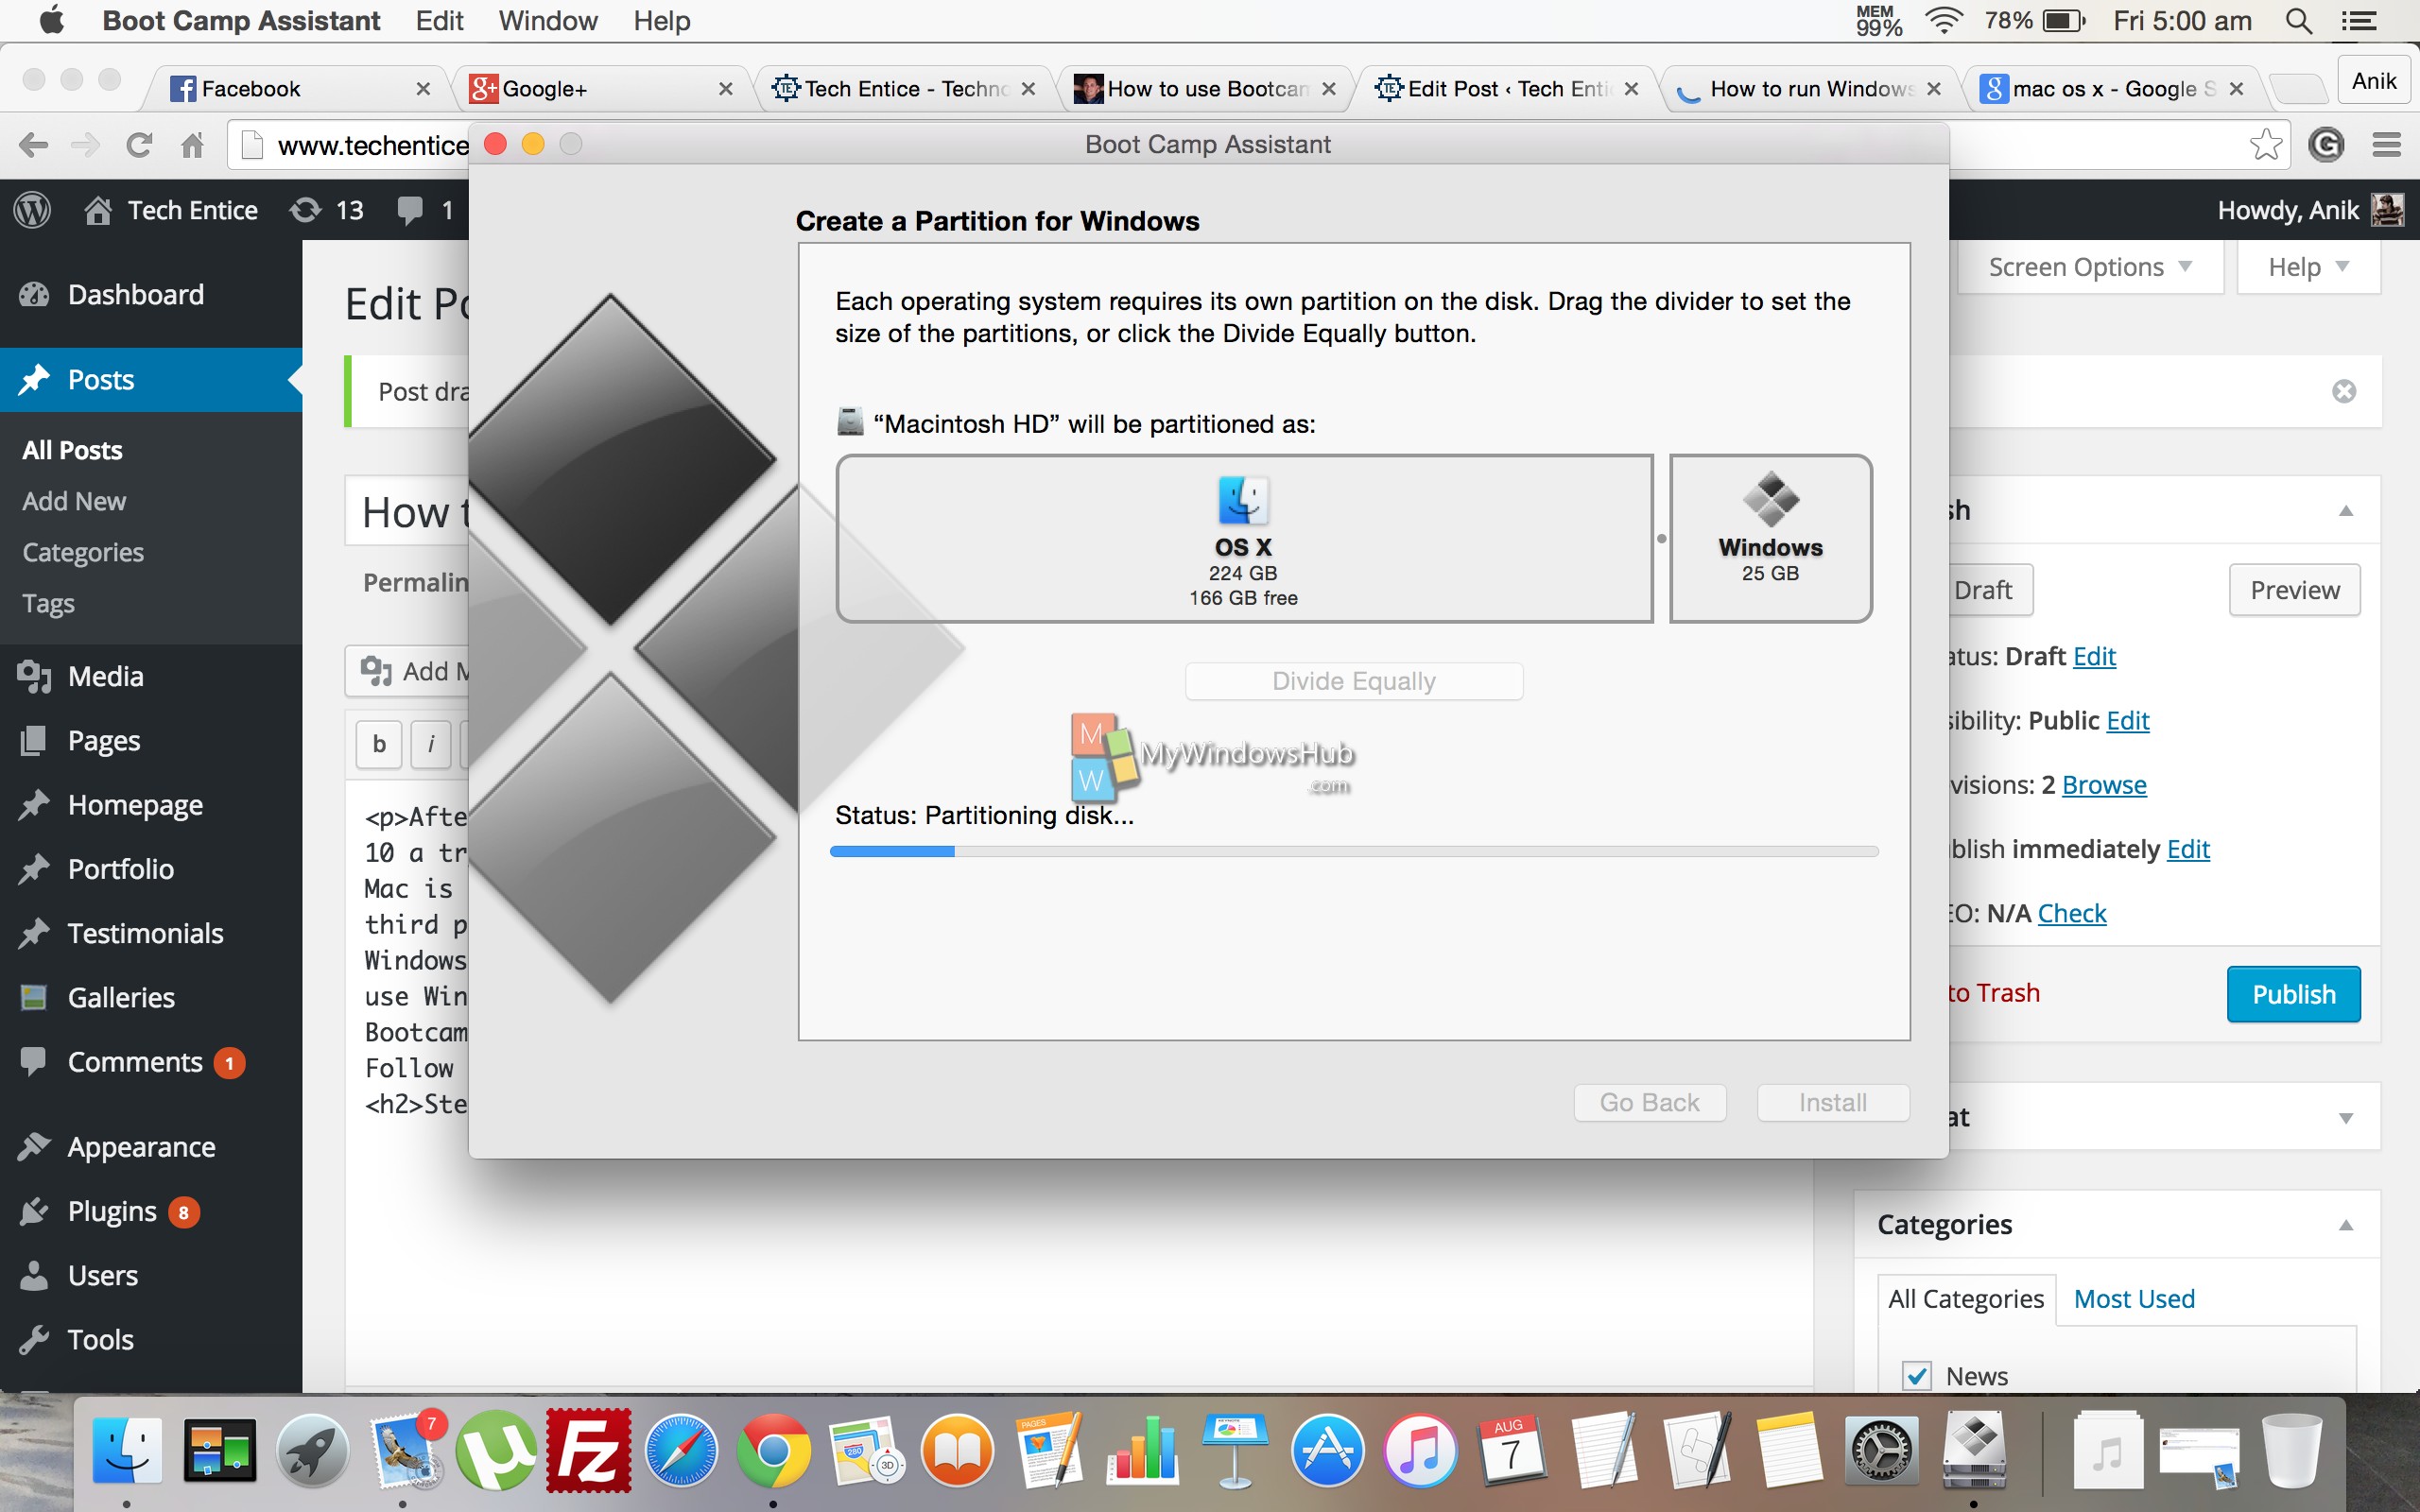 Start Installing Windows 10 on Mac using Boot Camp Assistance